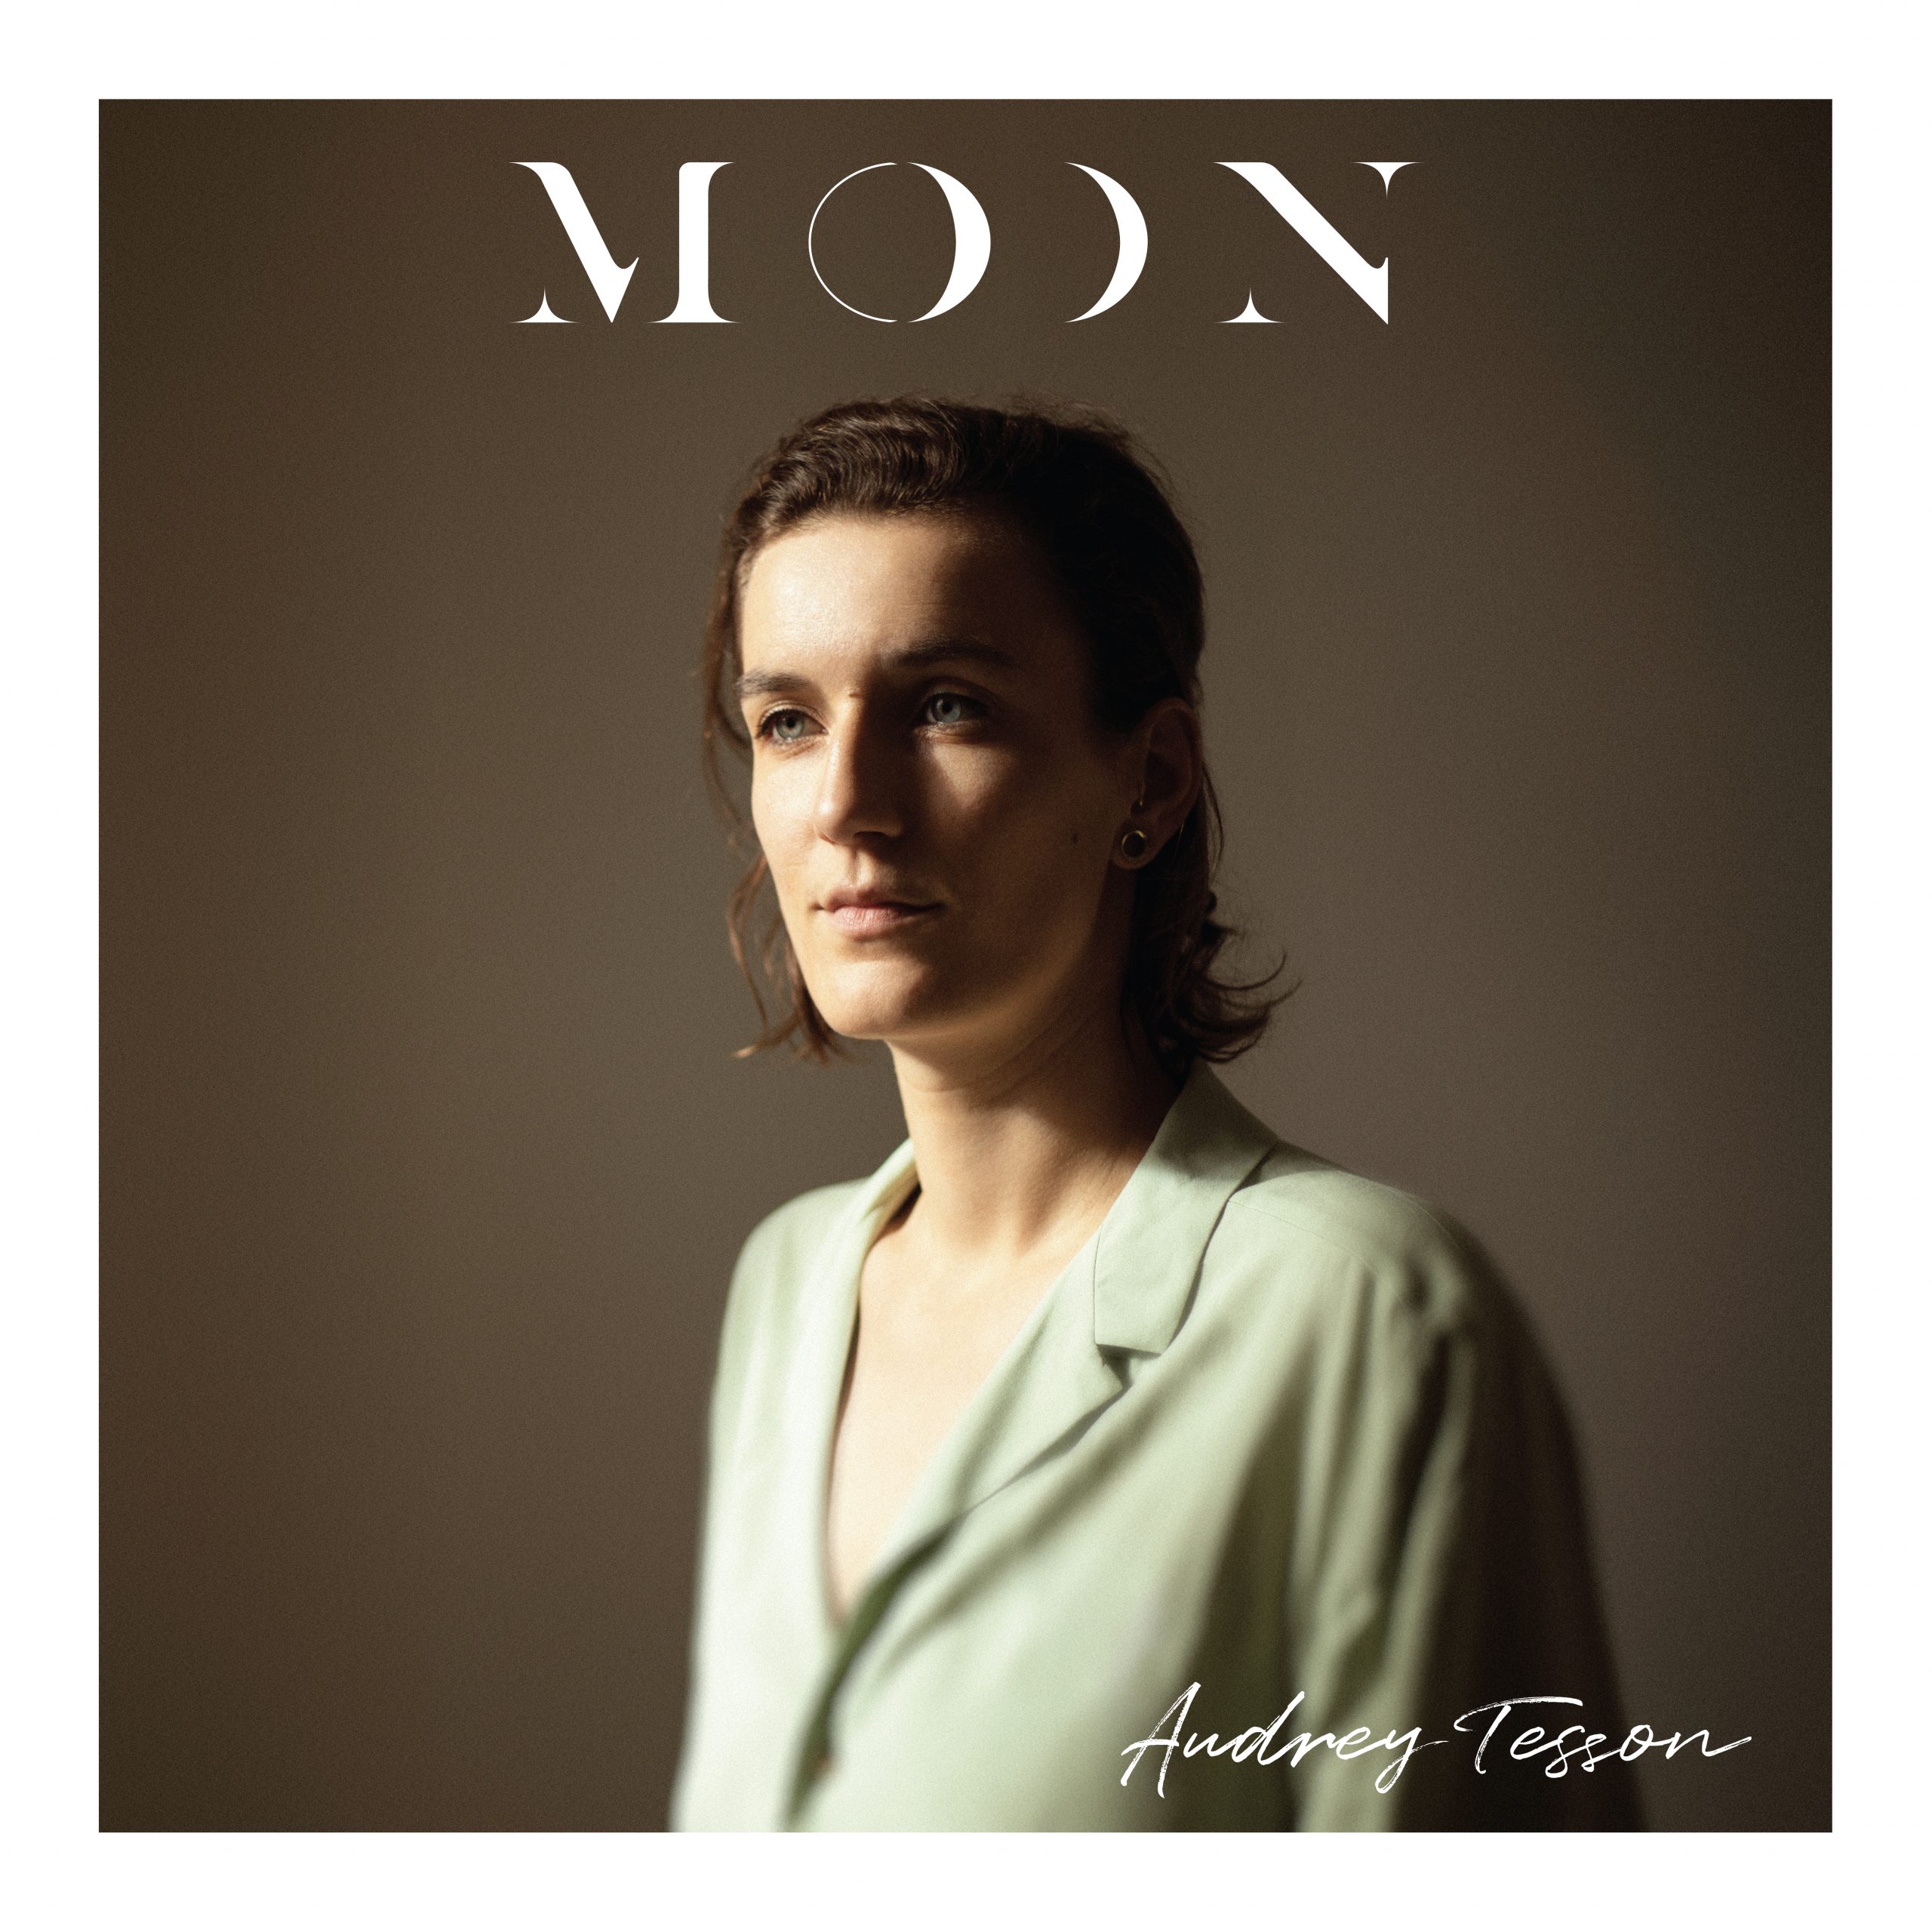 audrey tesson moon ep music french pop folk